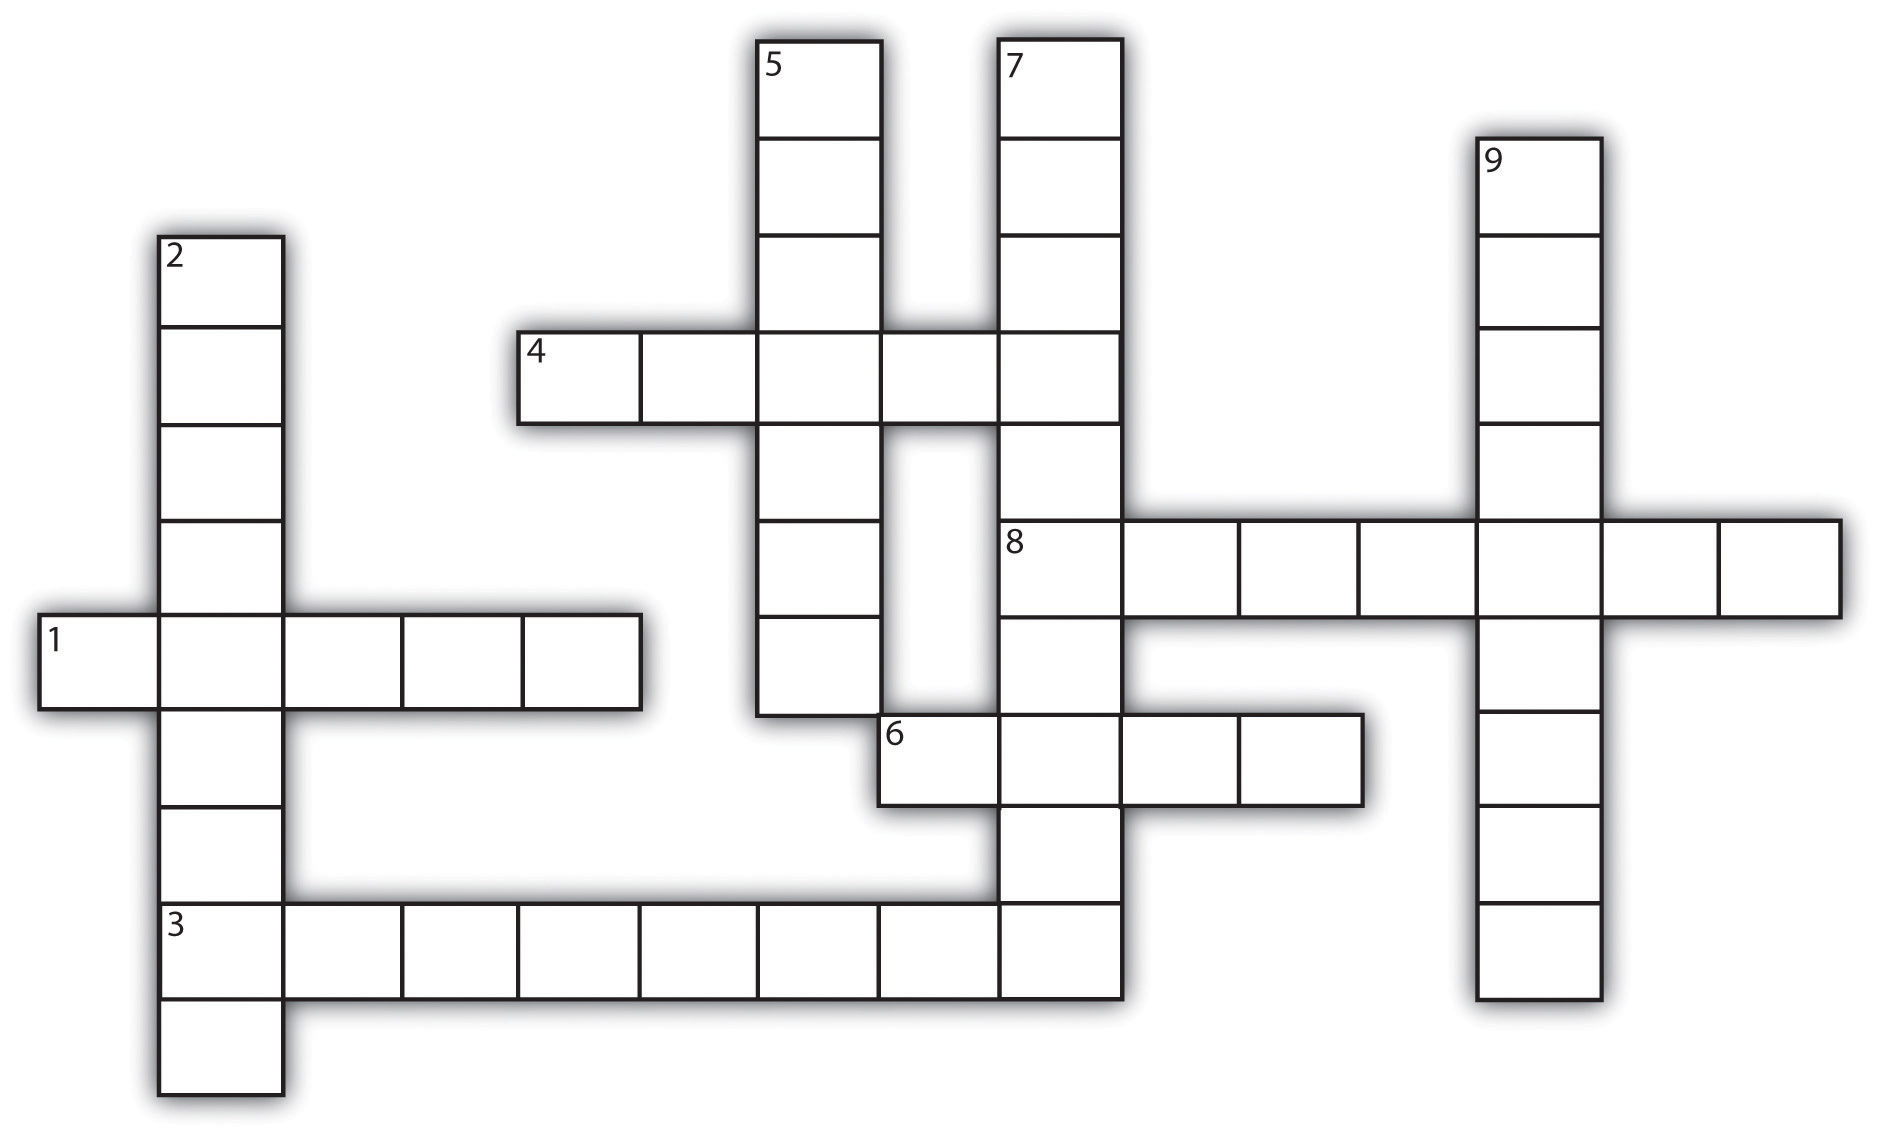 A crossword puzzle